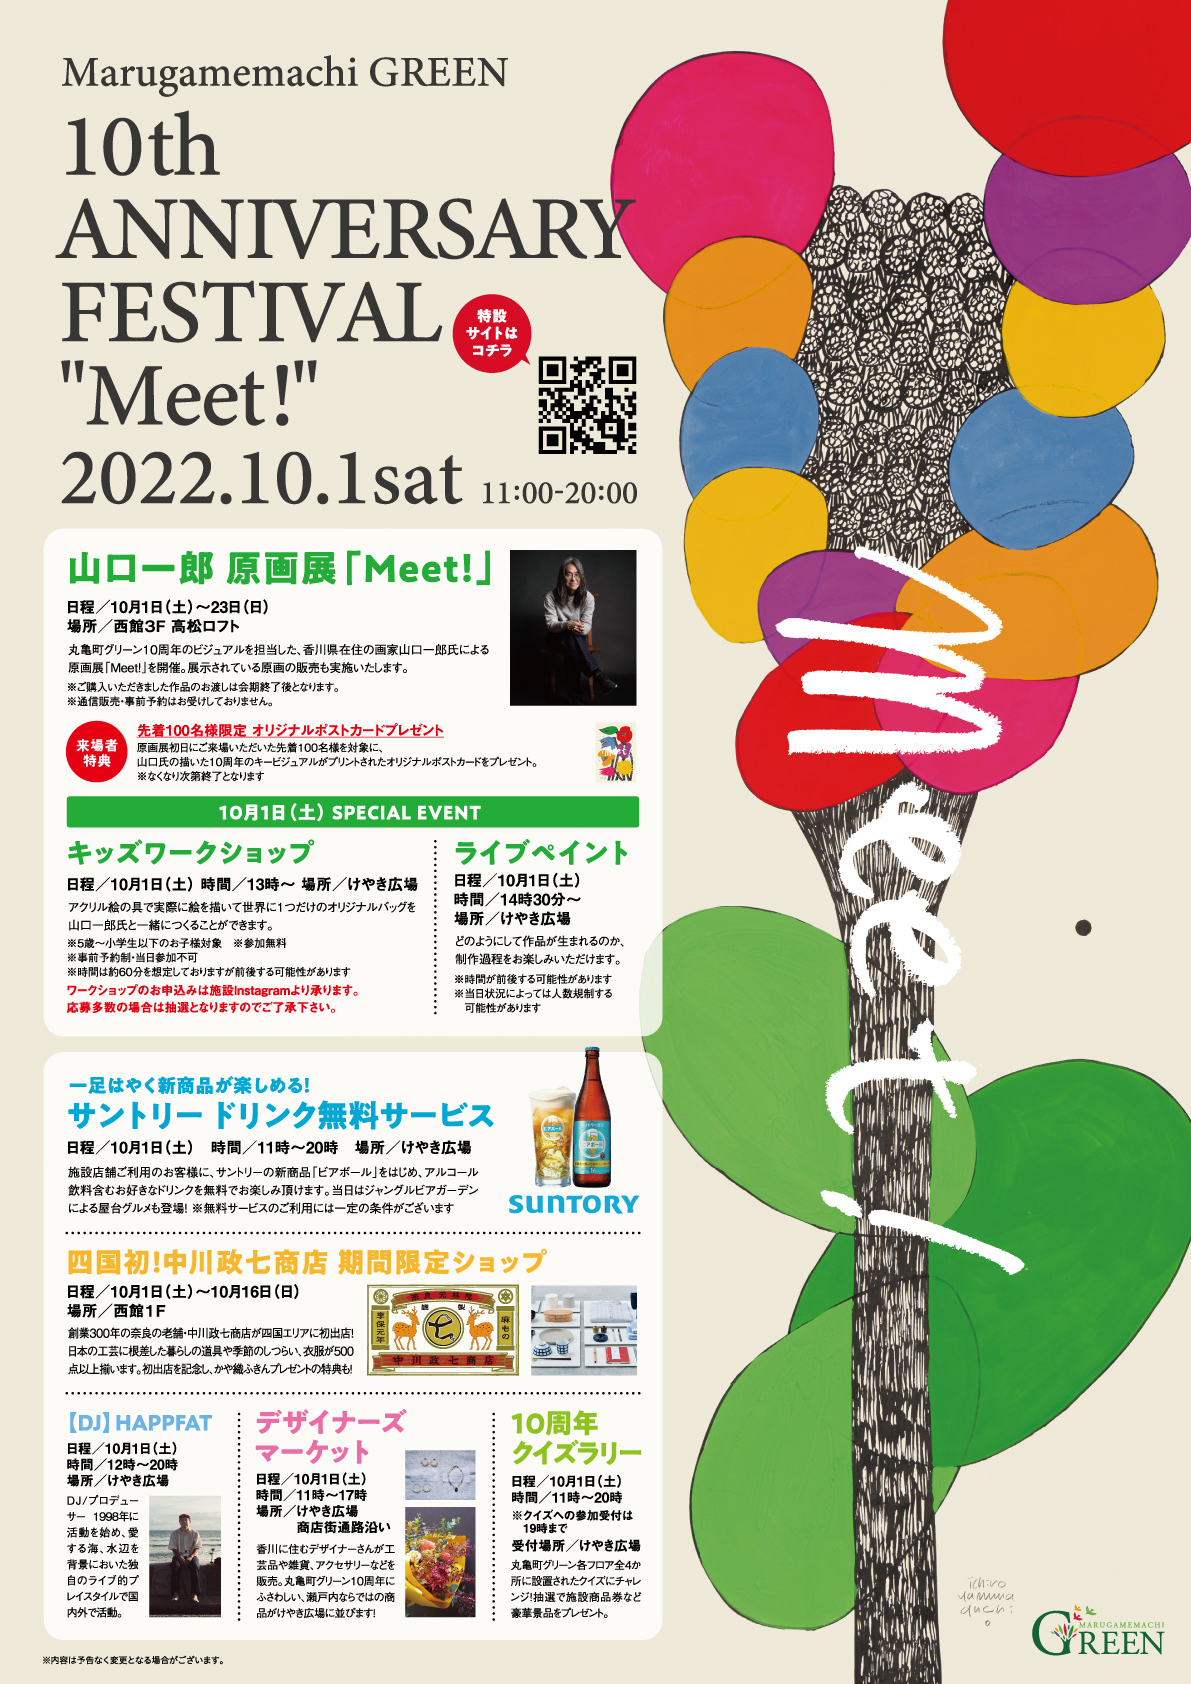 Marugamemachi GREEN 10th ANNIVERSARY FESTIVAL Meet! 2022.10.1 sat